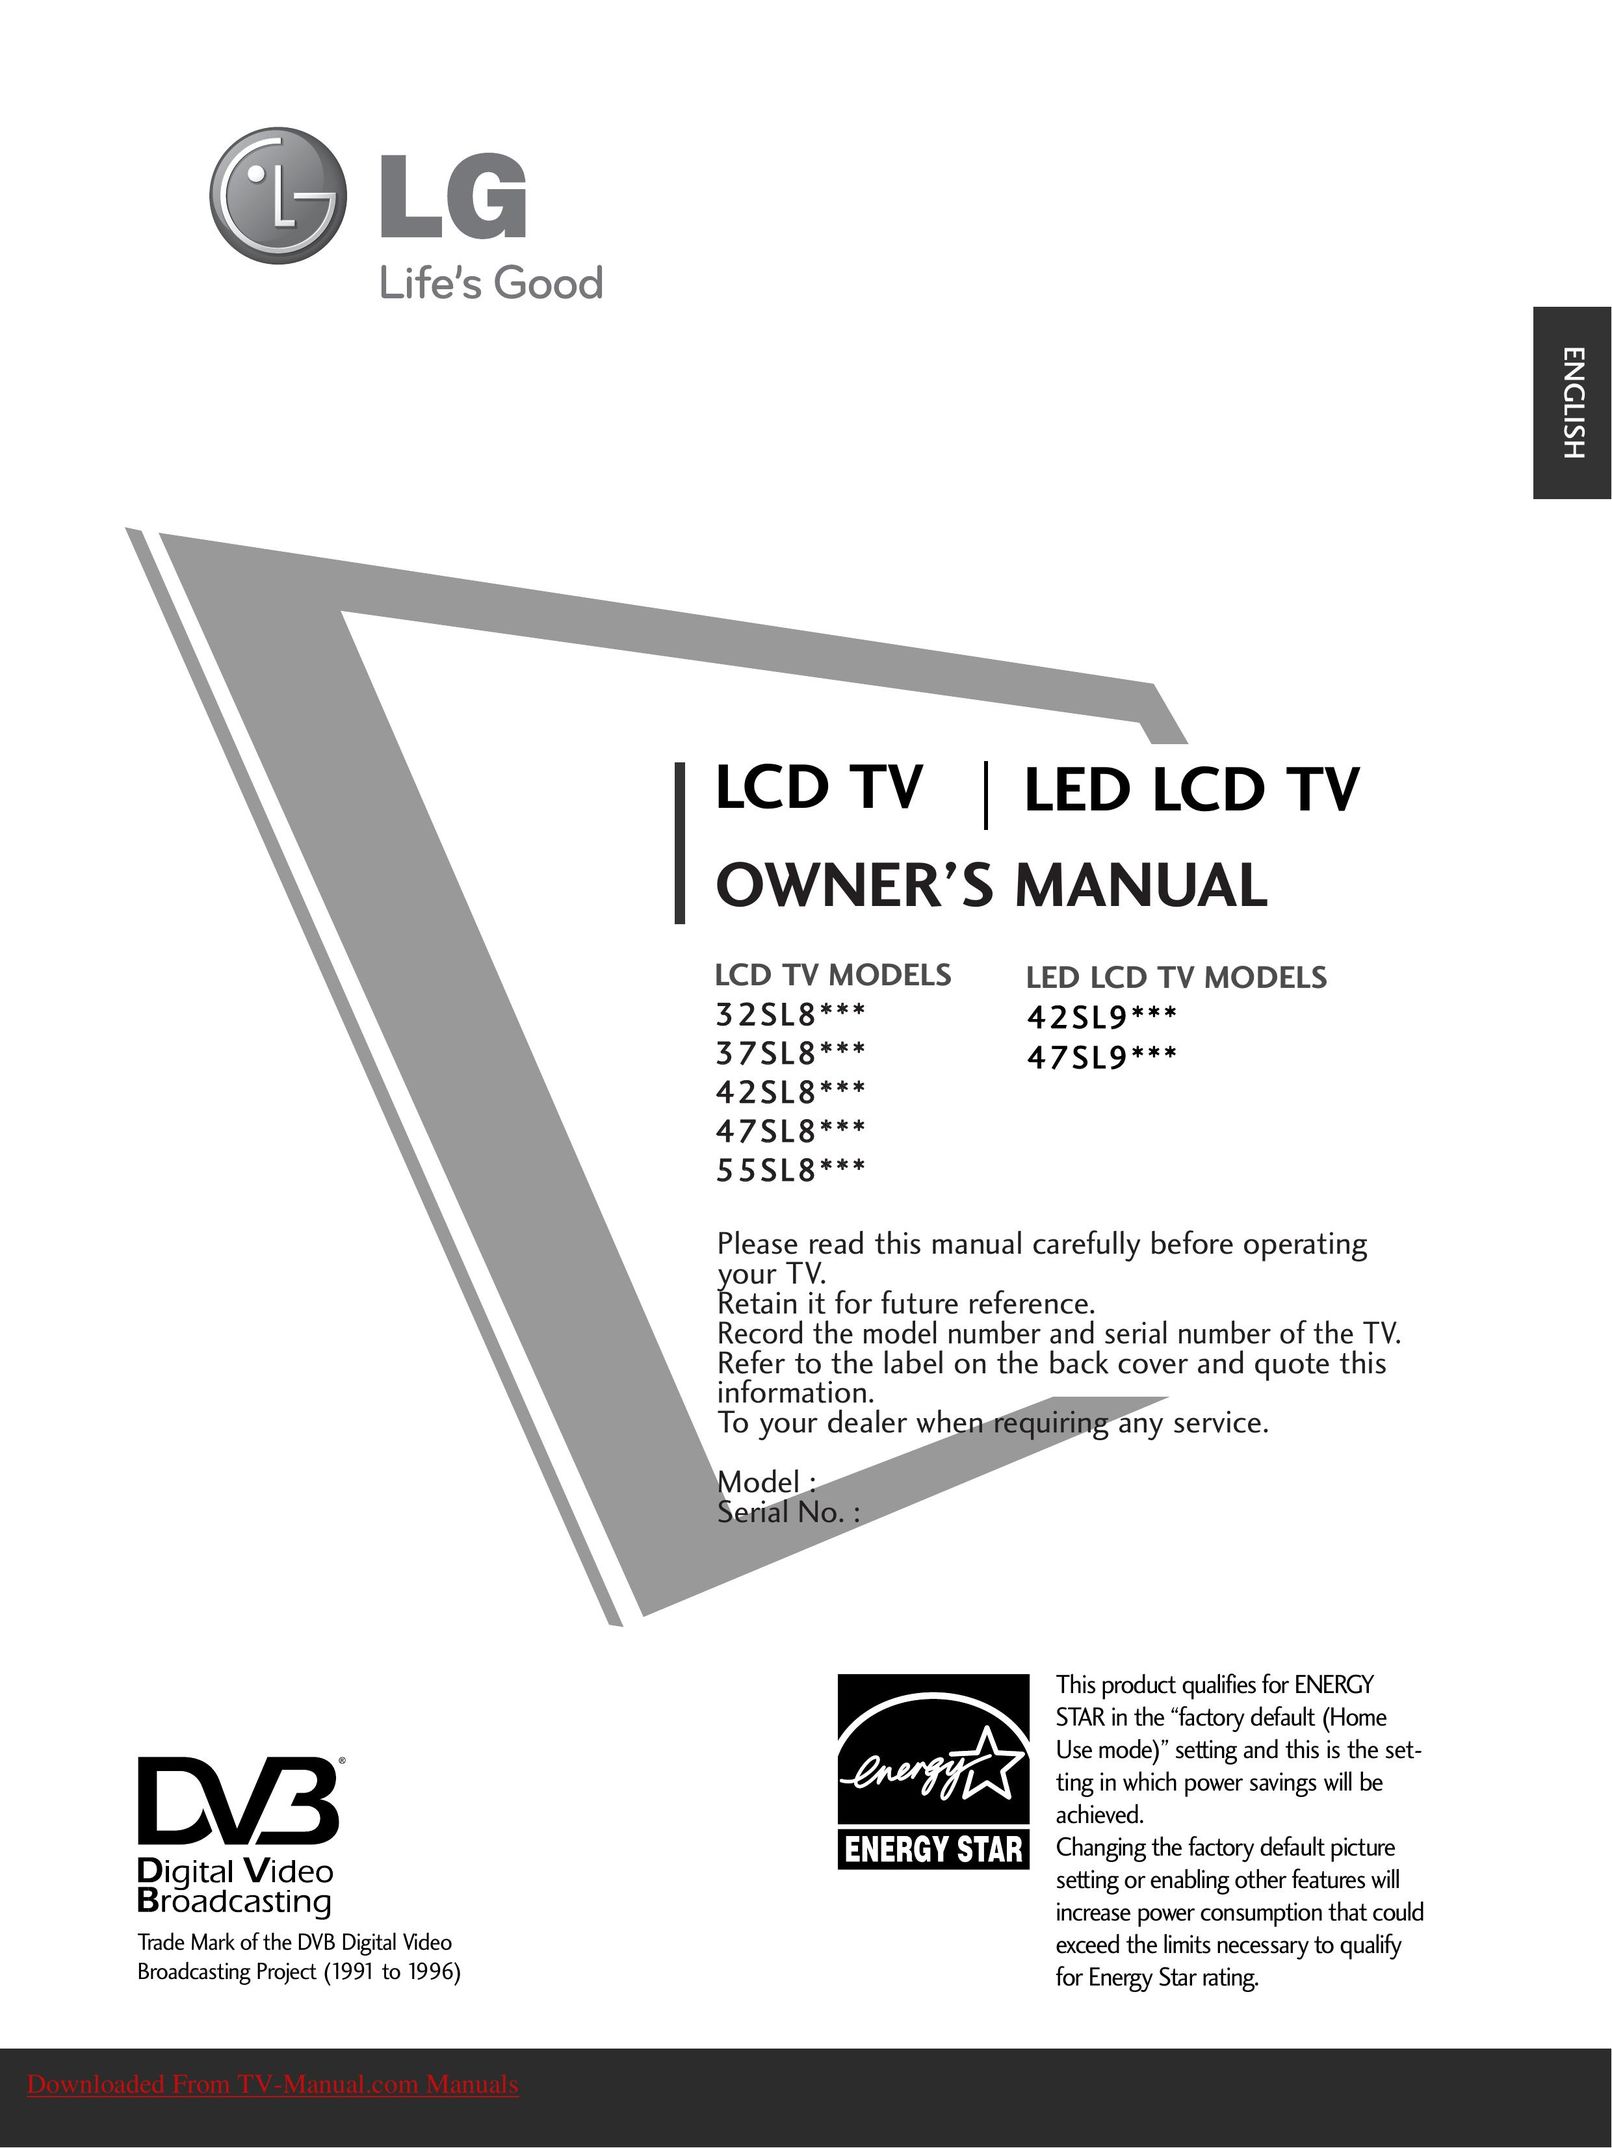 LG Electronics 55S18 Model Vehicle User Manual